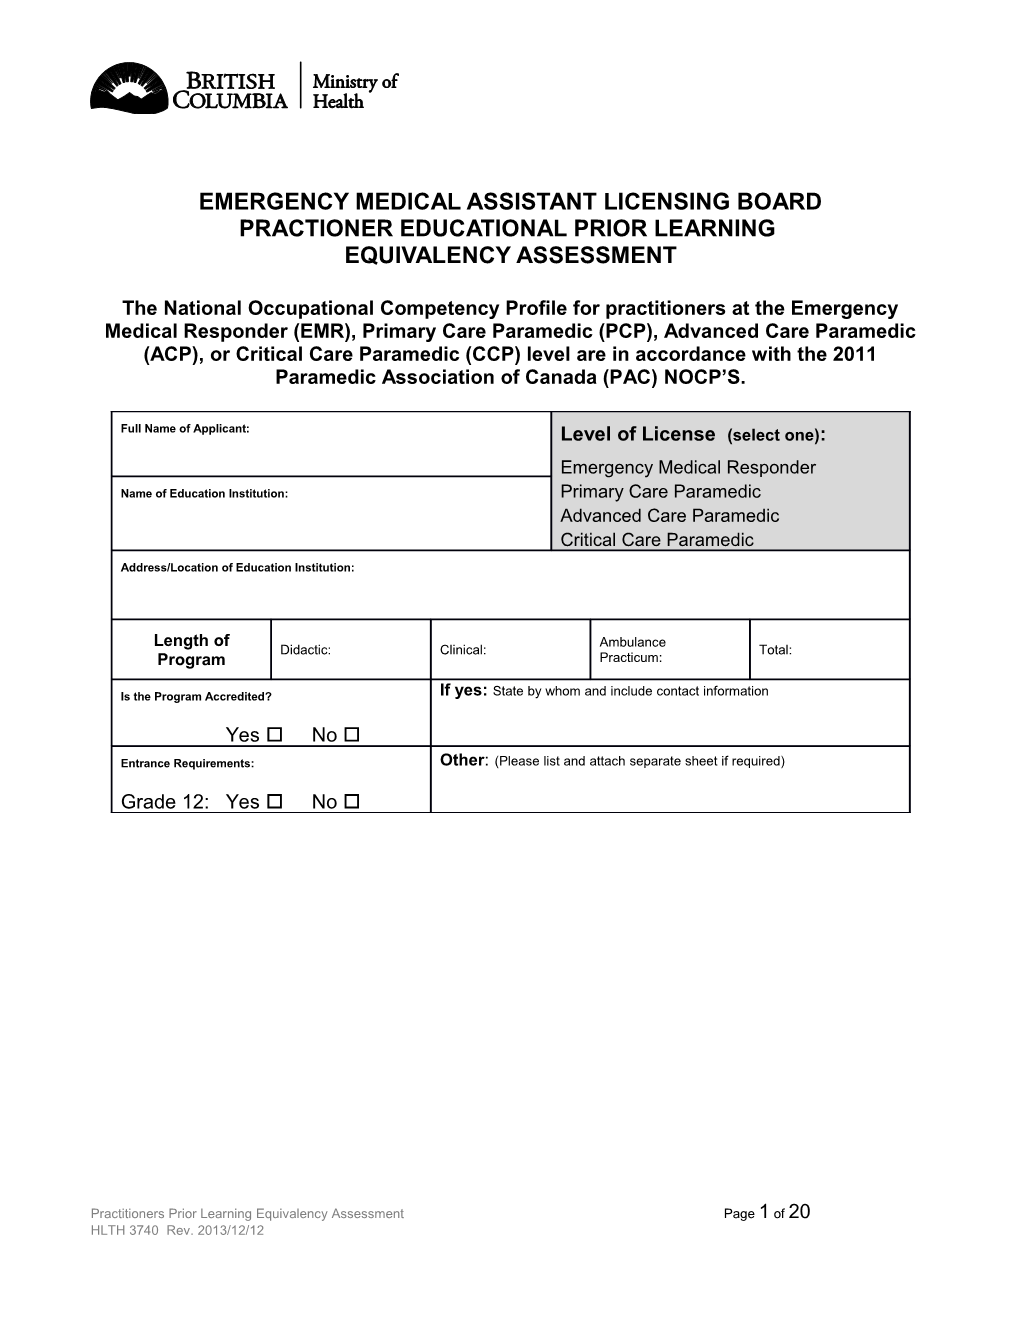 Emergency Medical Assistant Licensing Board Practioner Educational Prior Learning